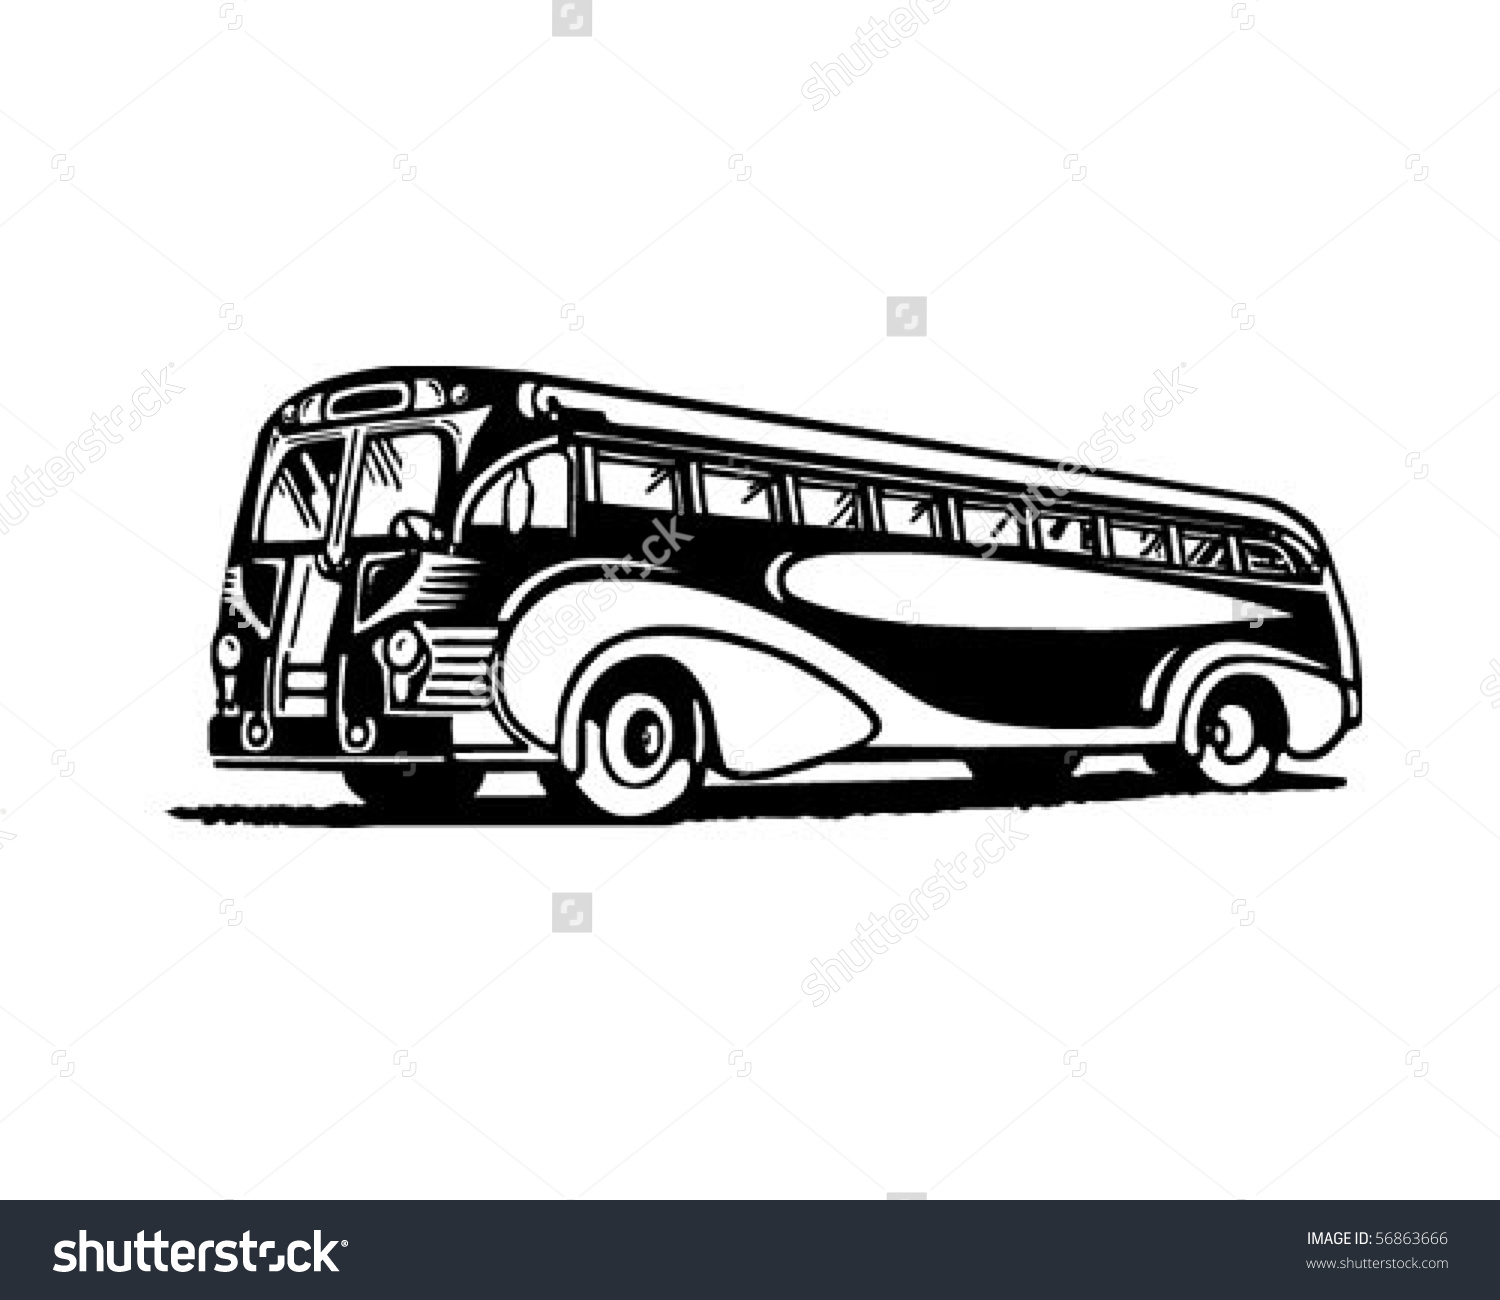 bus clipart vector